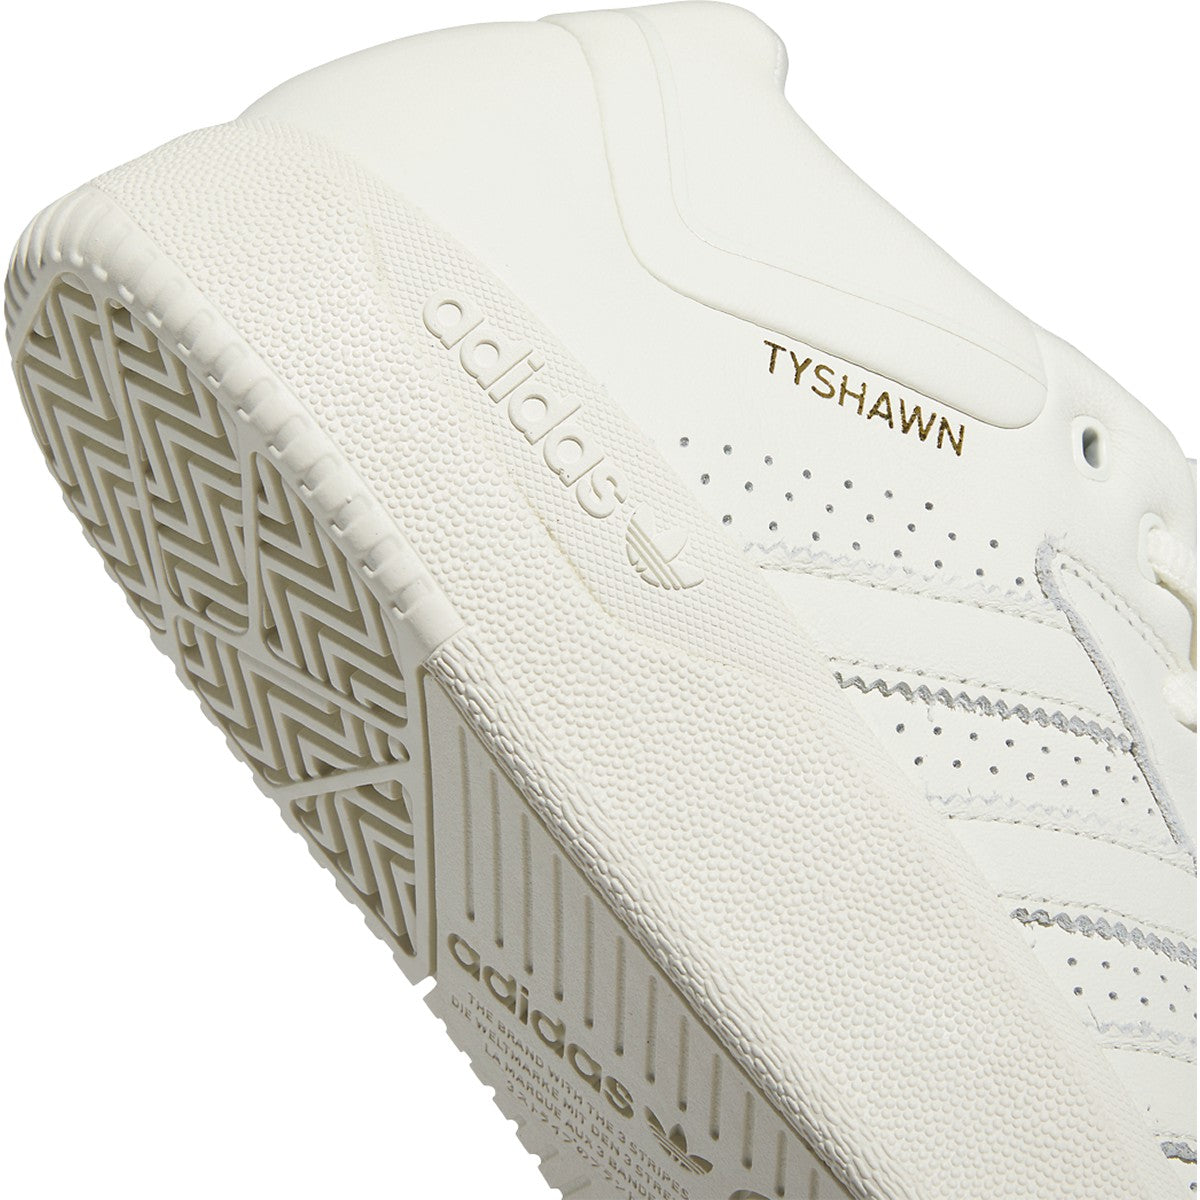 Ivory Tyshawn Adidas Skateboard Shoe Detail